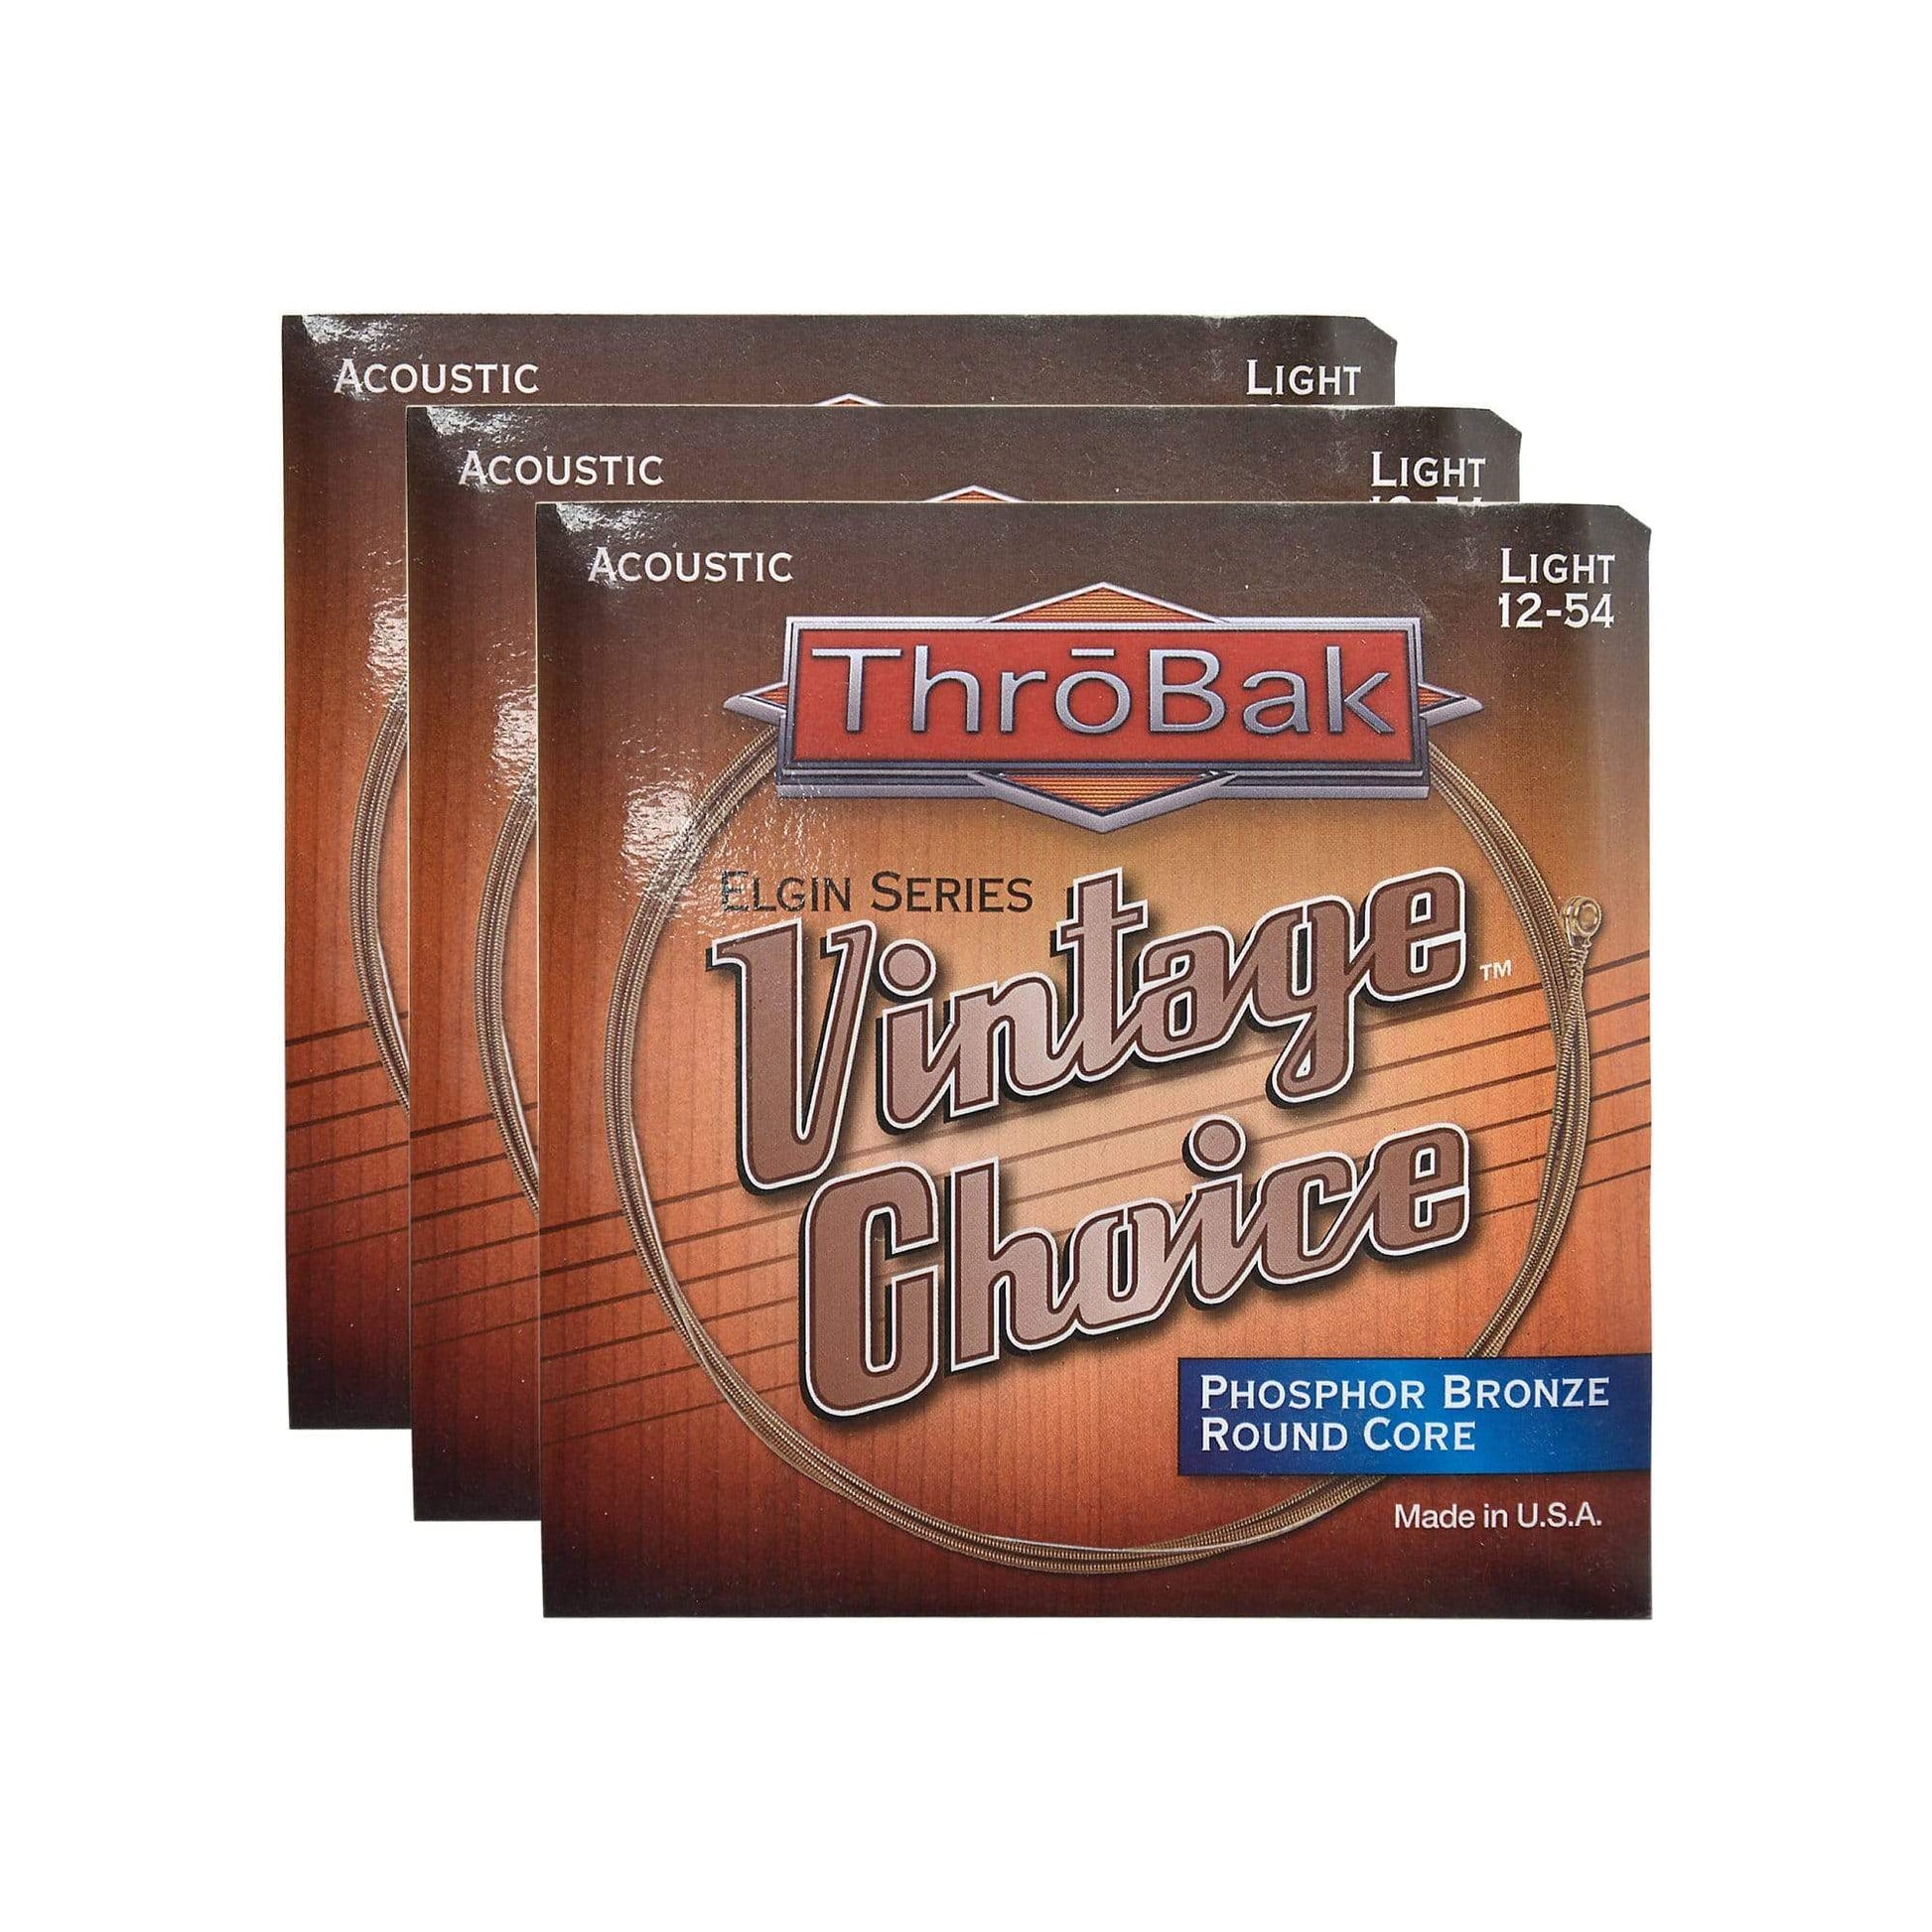 ThroBak Round Wound Phosphor Bronze Round Core Light Acoustic String Set (12-54) 3 Pack Bundle Accessories / Strings / Guitar Strings